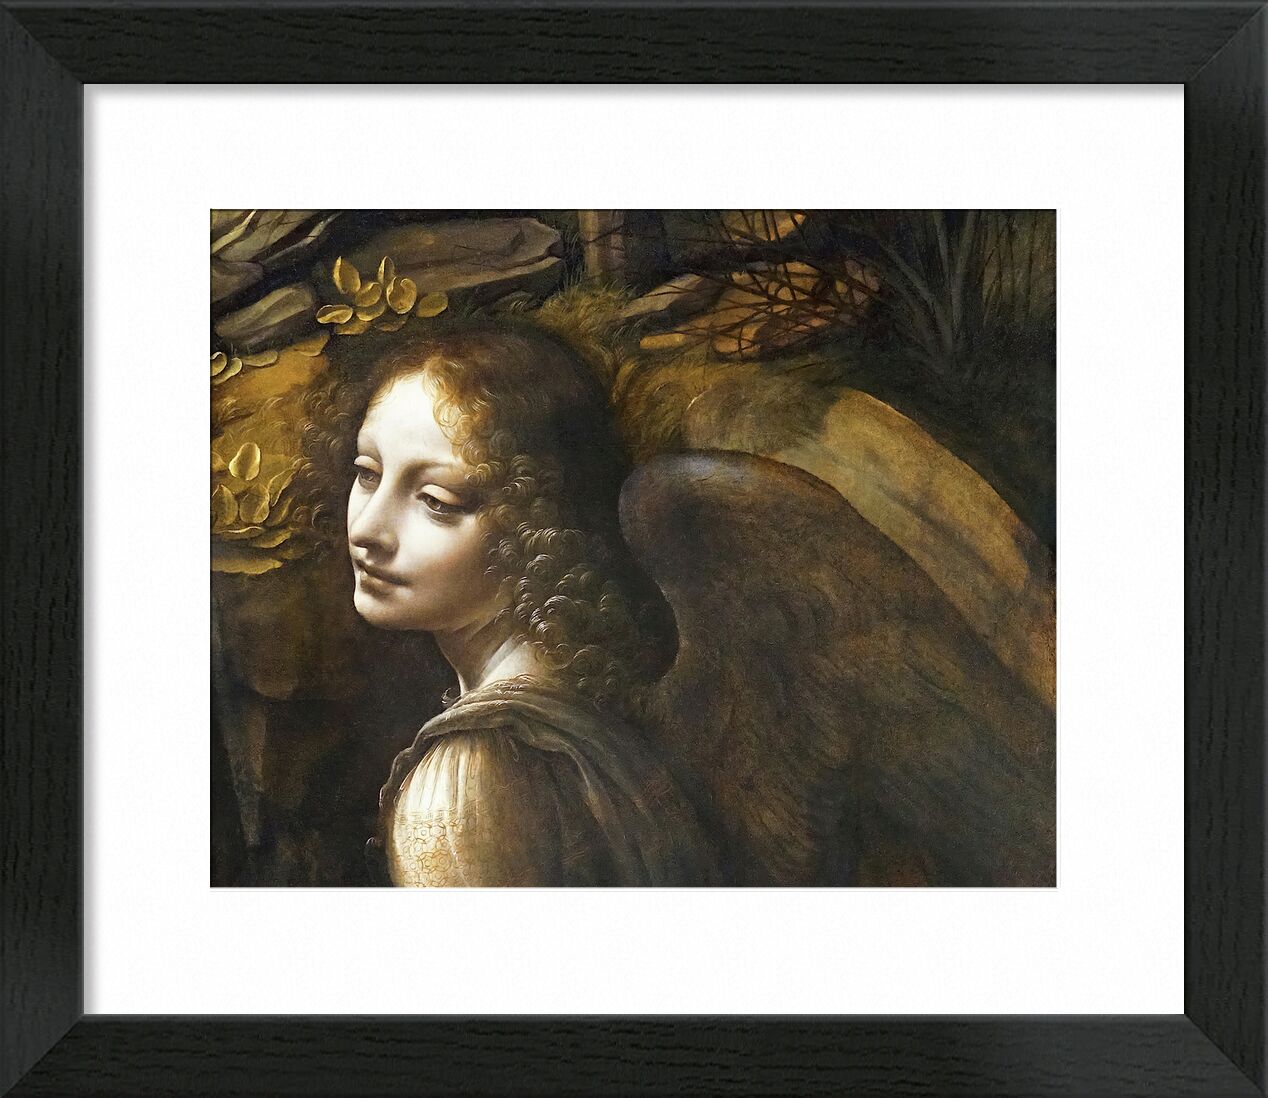 Details of The Angel, The Virgin of the Rocks - Leonardo da Vinci von Bildende Kunst, Prodi Art, Leonard de Vinci, ange, Malerei, Porträt, flügel, Frau, lockig